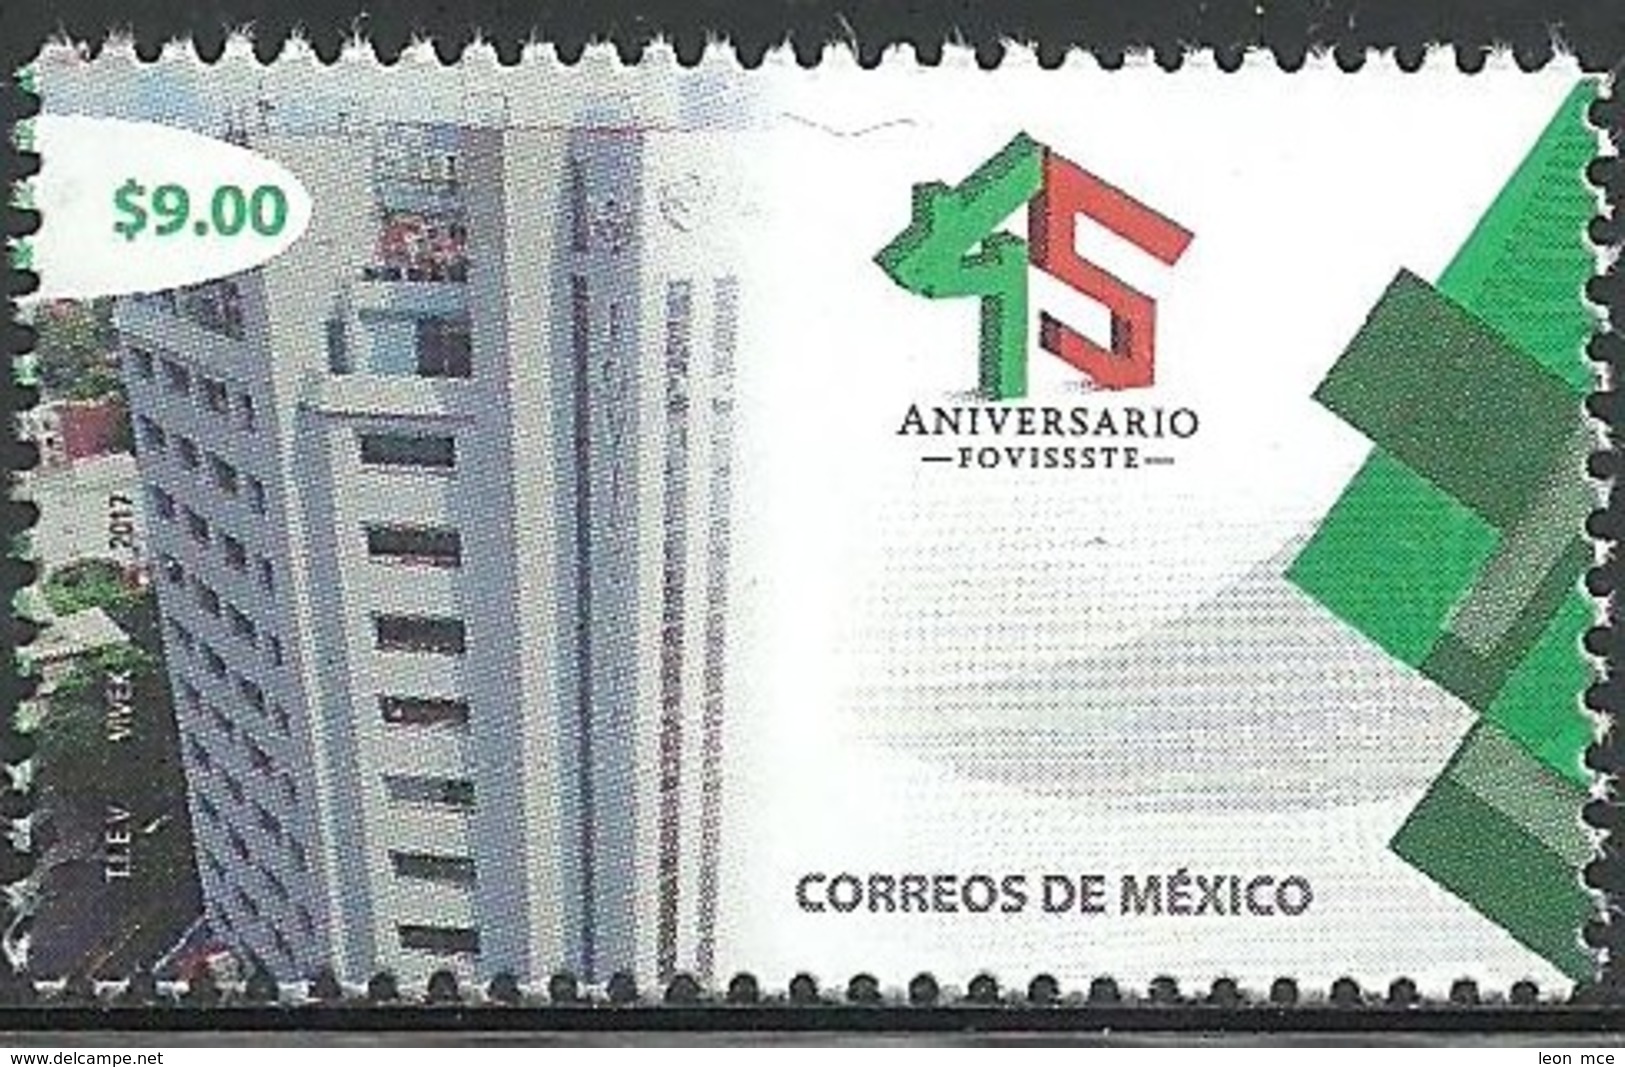 2017 MÉXICO 45 Aniversario Del FOVISSSTE VIVIENDA, ARQUITECTURA MNH LIVING PLACE, ARCHITECTURE, Apartment Building - Mexique